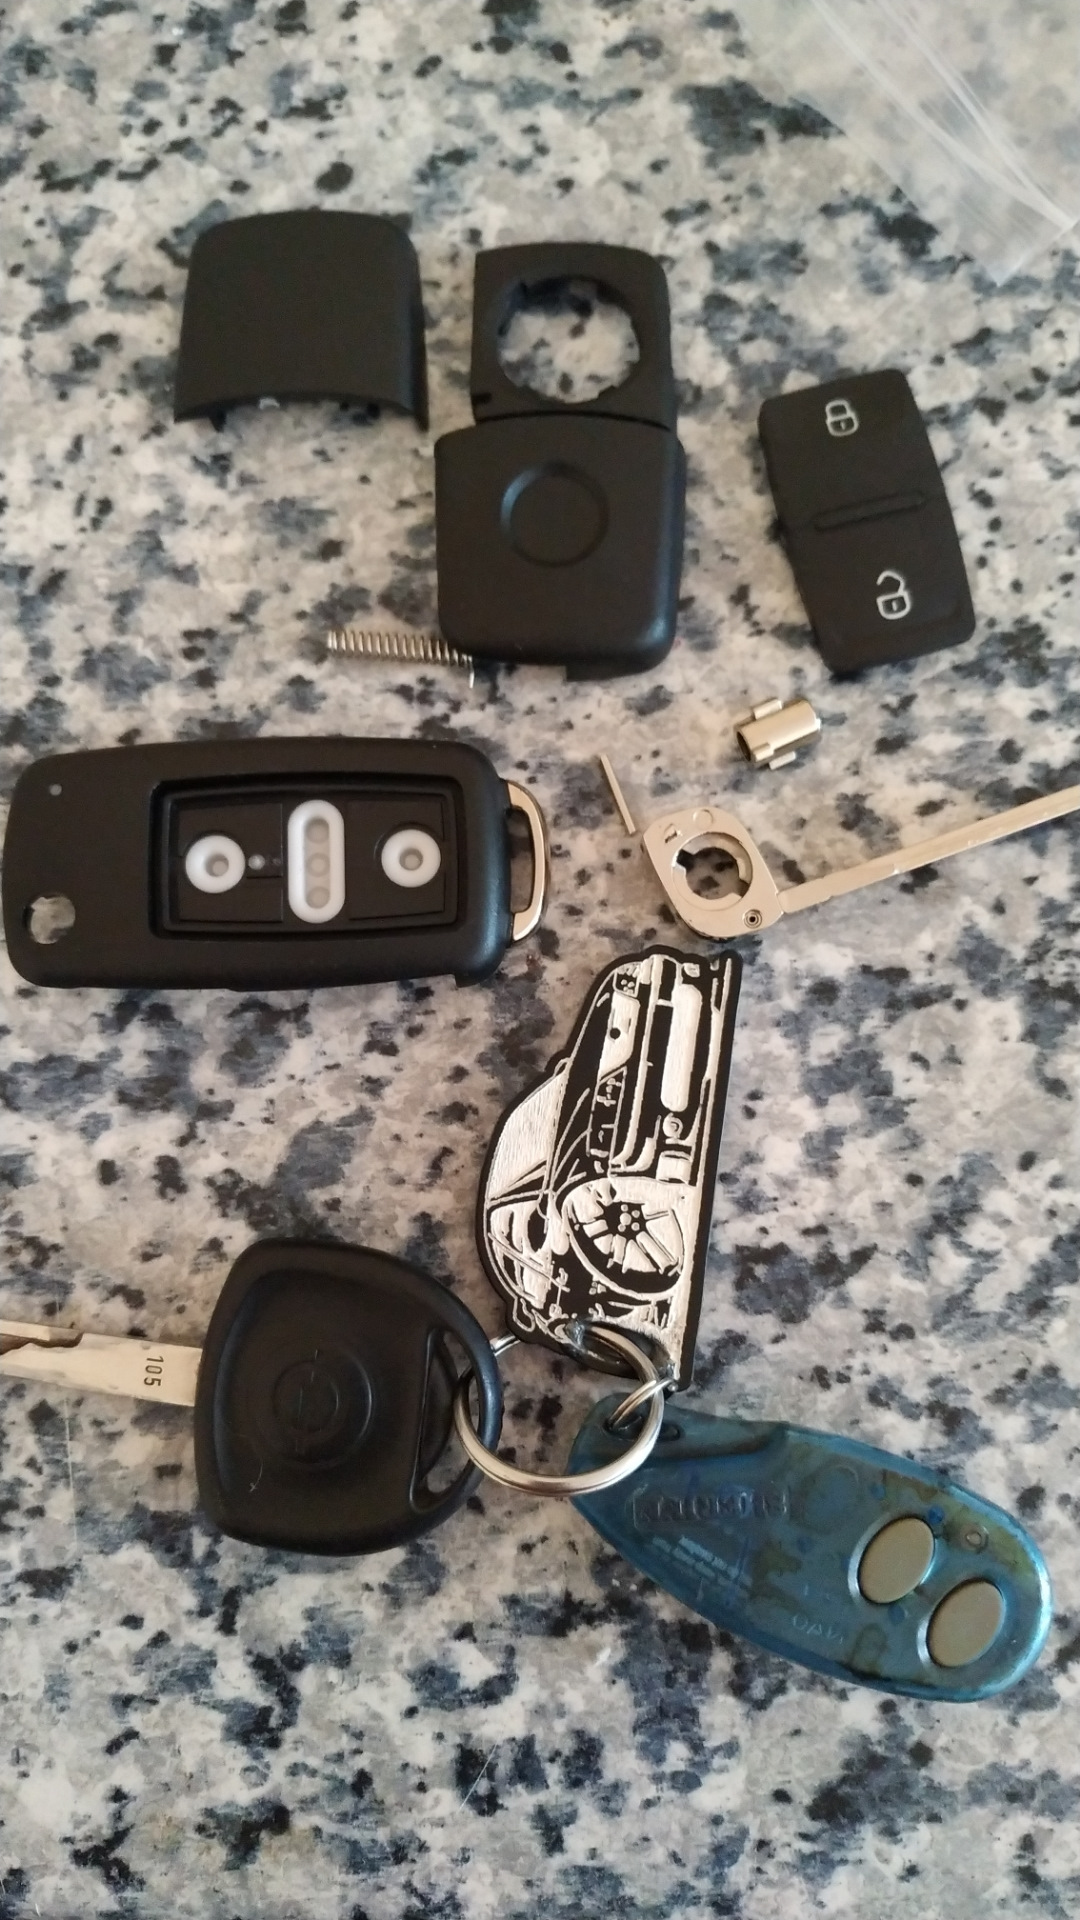 Ключи опель вектра б. Ключ зажигания Вектра б выкидной. Ключи Opel Vectra b 1996. Opel Vectra a ключ. Выкидной ключ на три кнопки Вектра с.